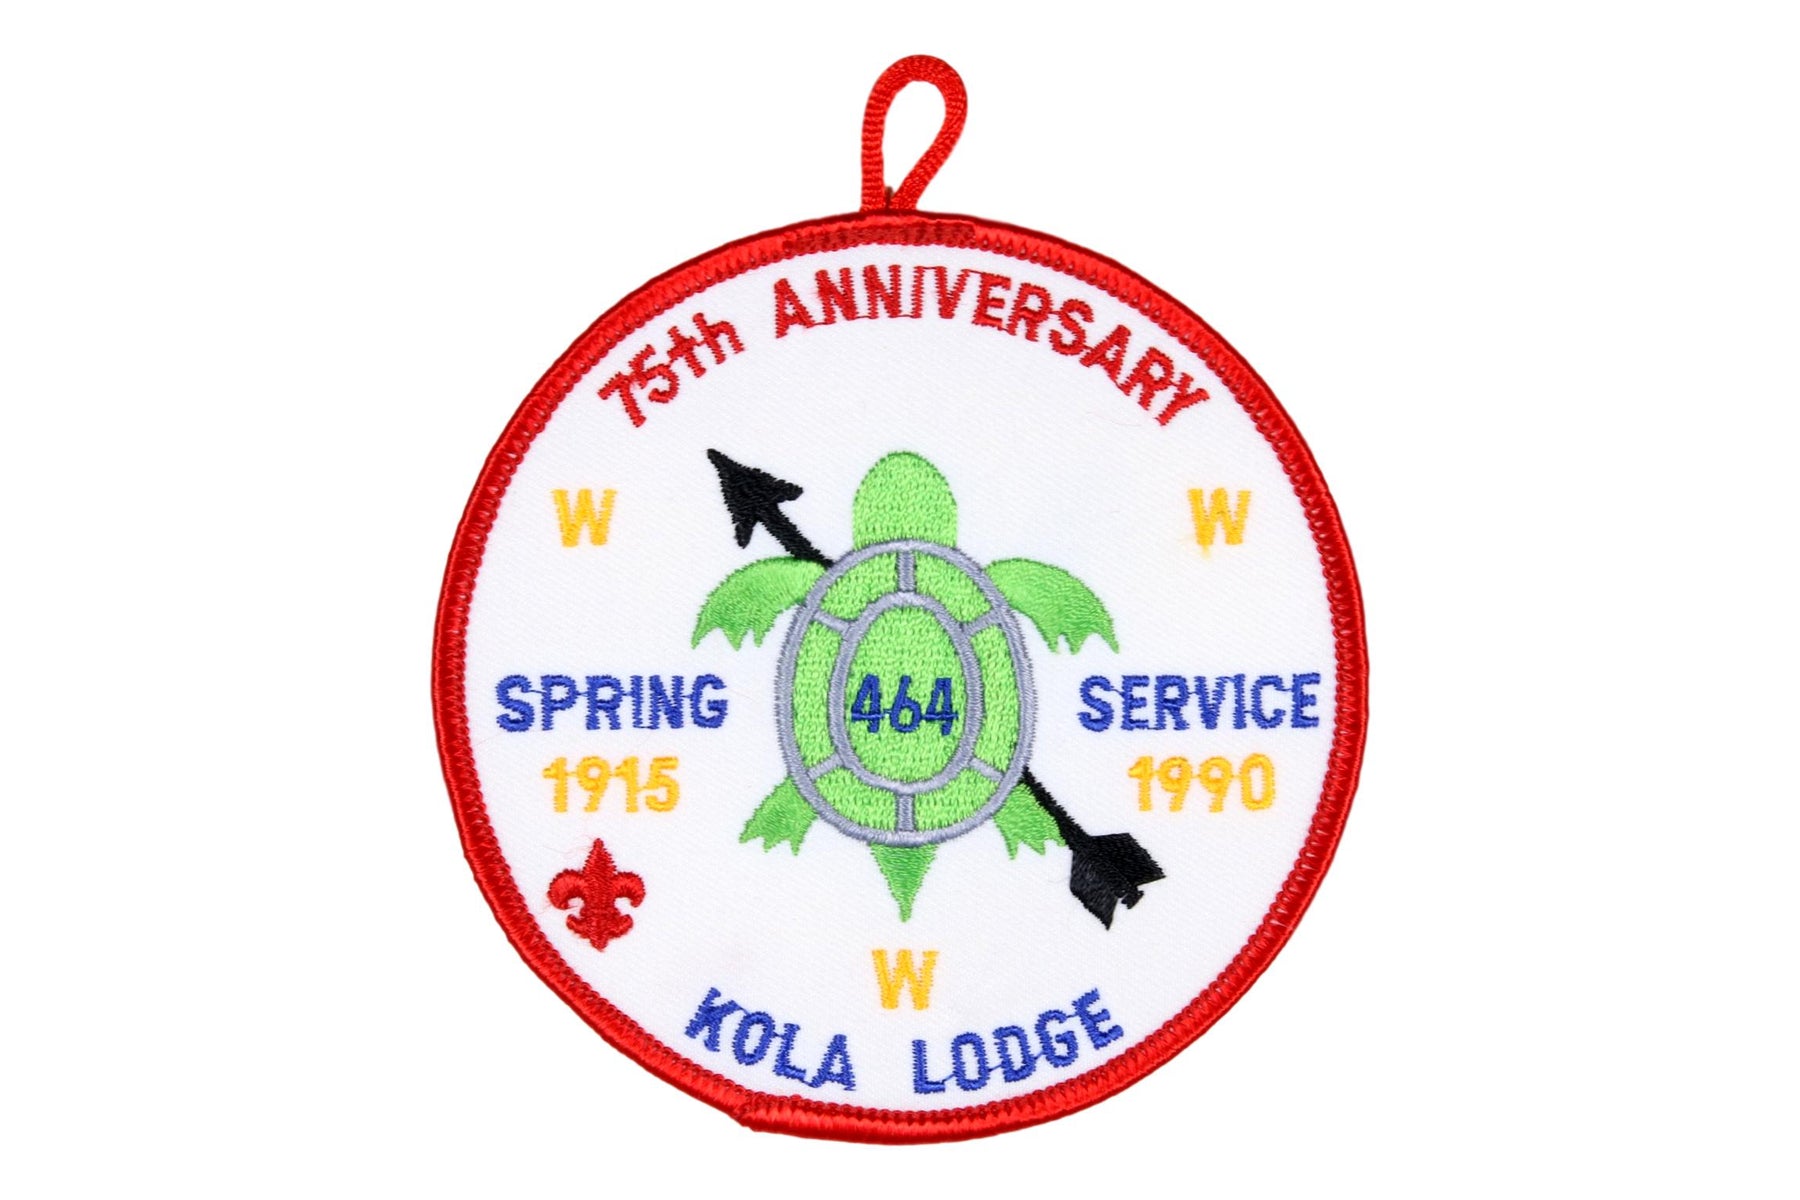 Lodge 464 Kola Patch eR1990-2a